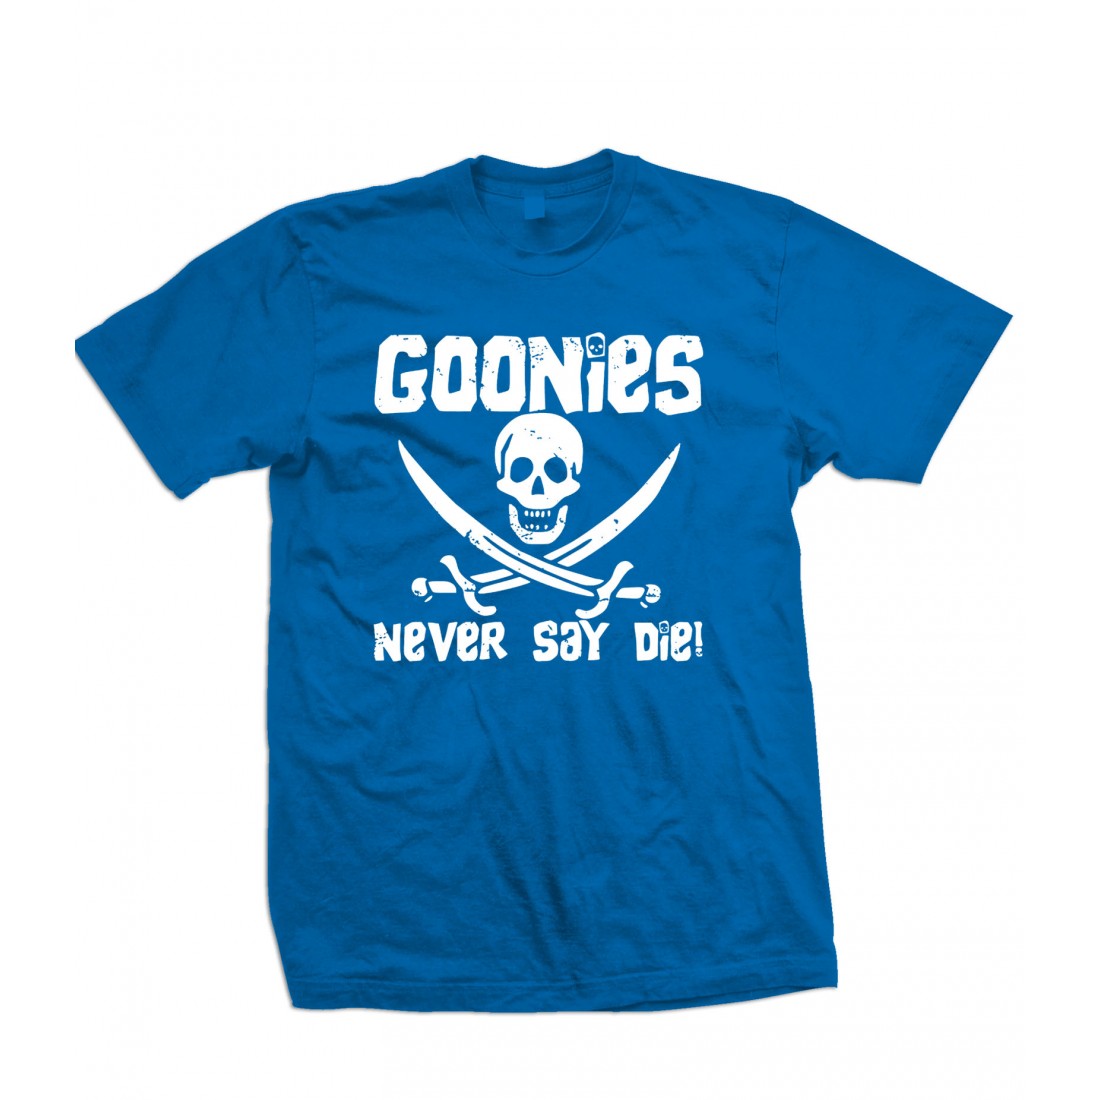 The Goonies Never Say Die T Shirt.